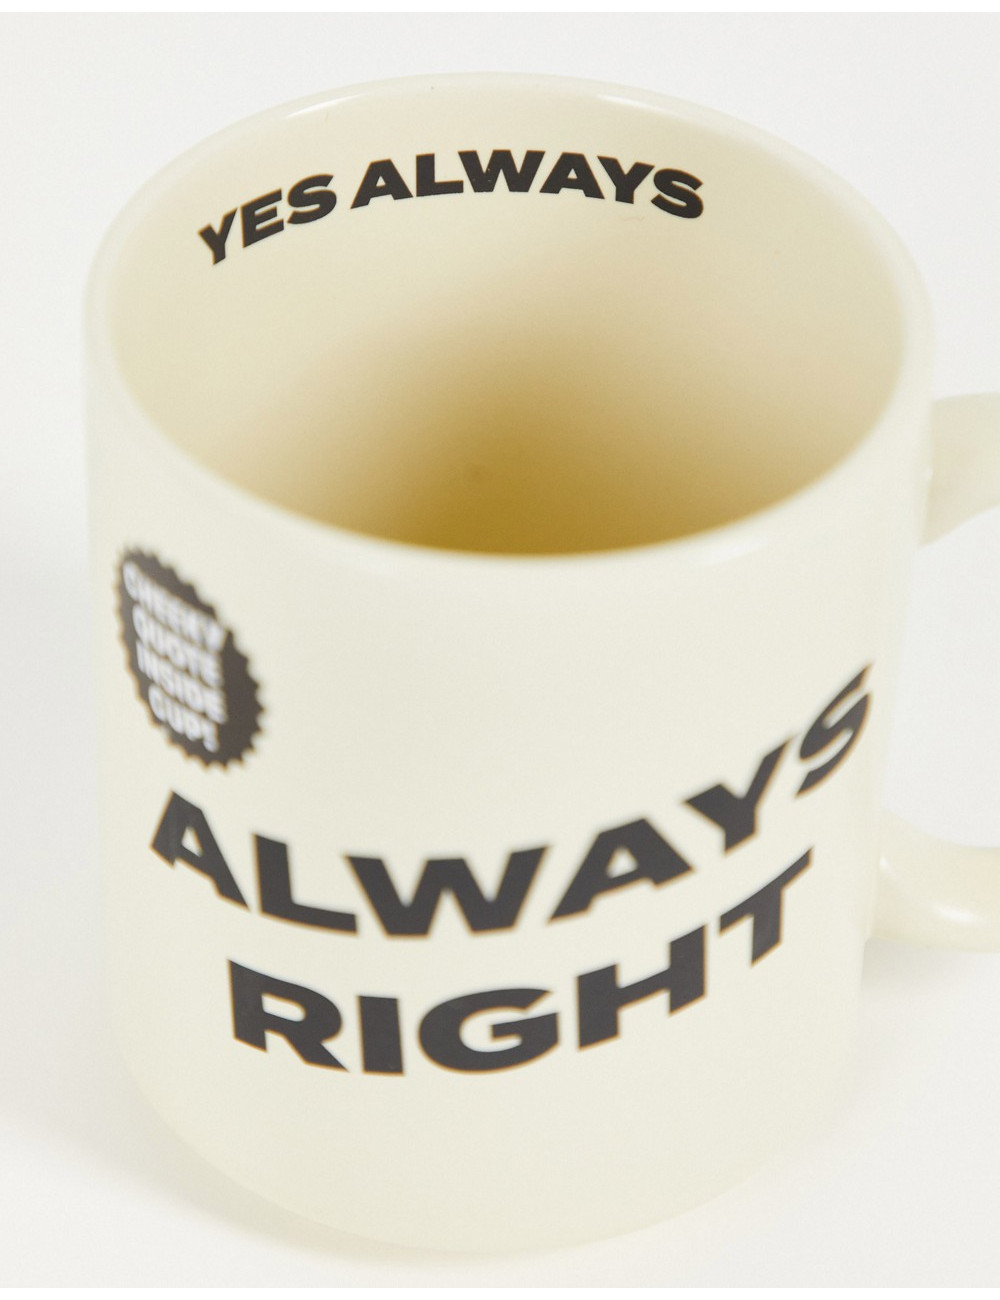 Typo mug with slogan...